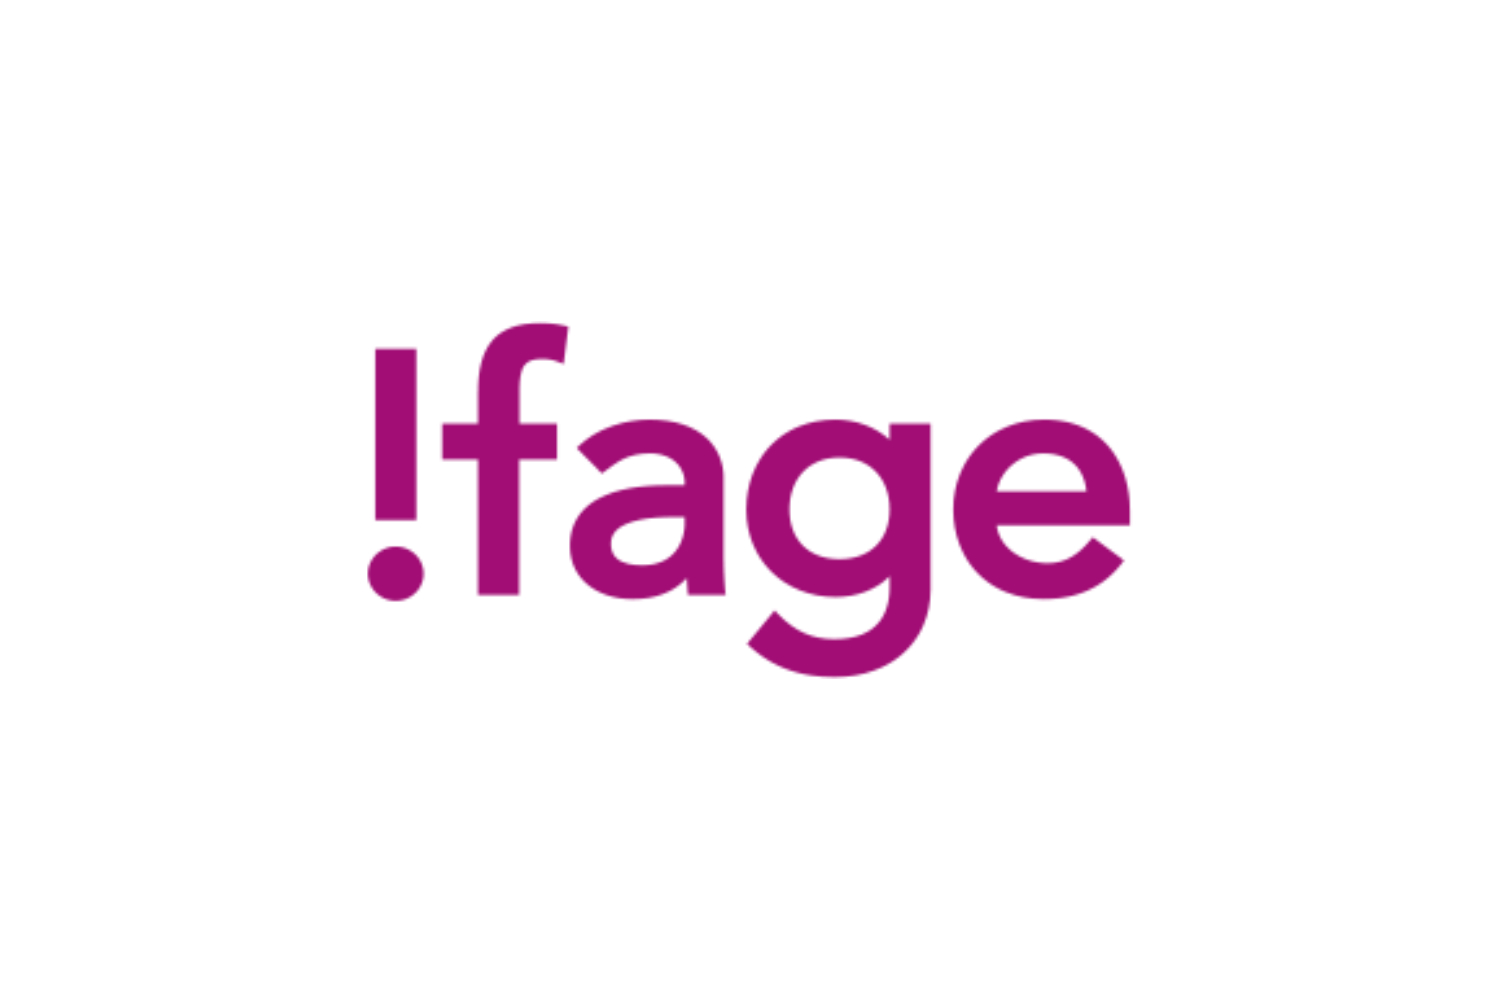 ifage